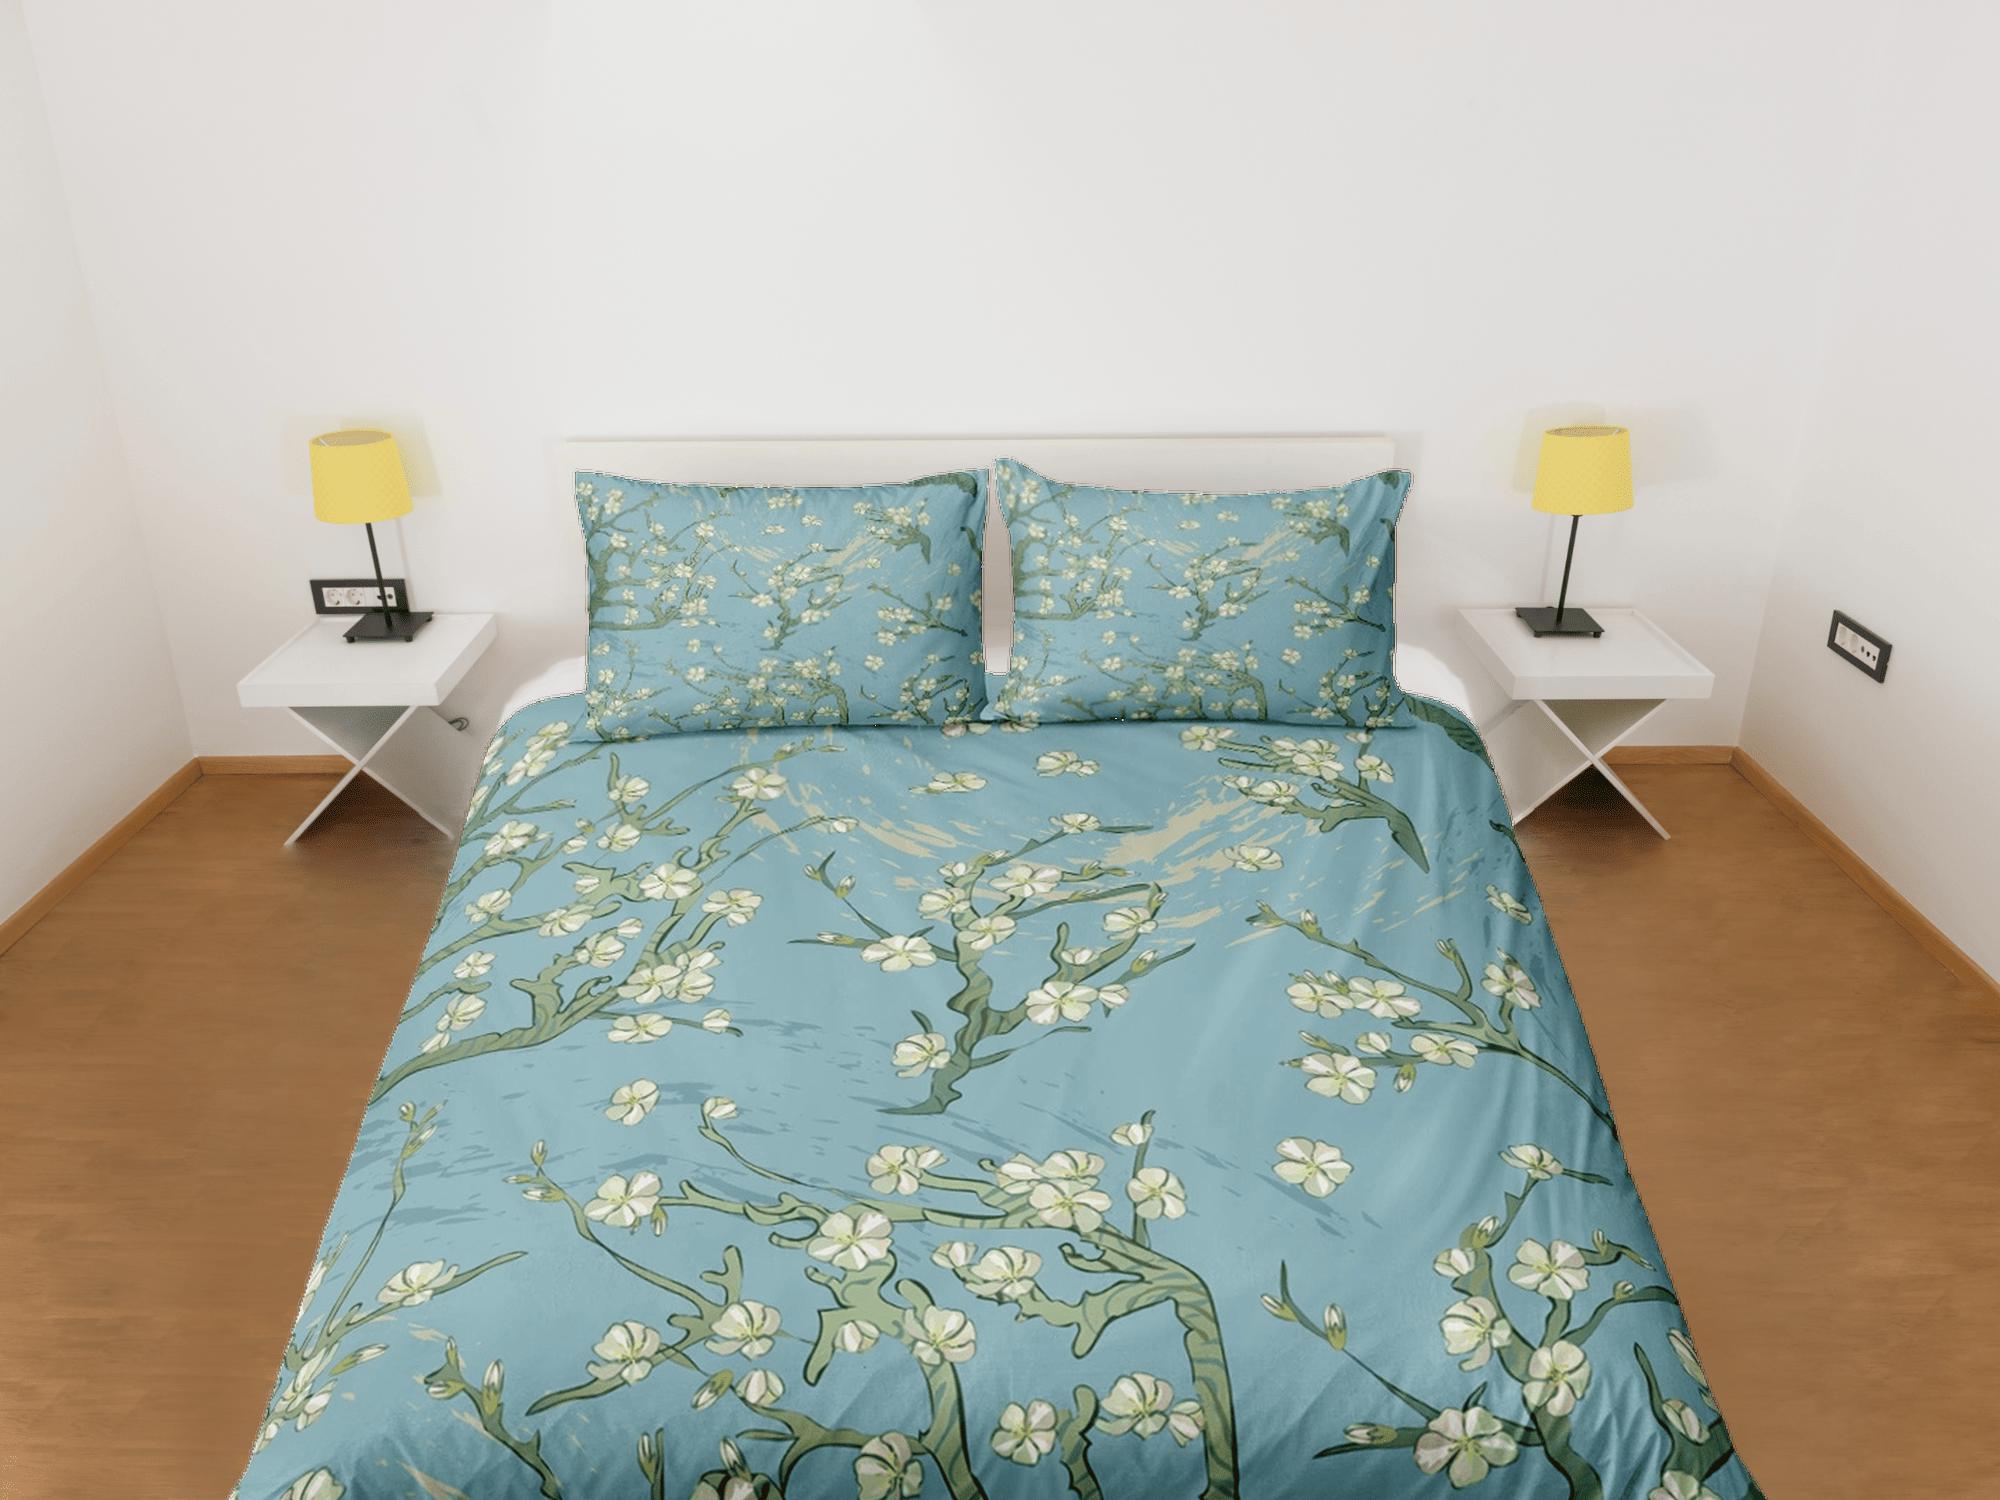 daintyduvet Moss green bedding cherry blossom printed duvet cover queen, king, boho bedding designer bedspread maximalist full size bedding aesthetic